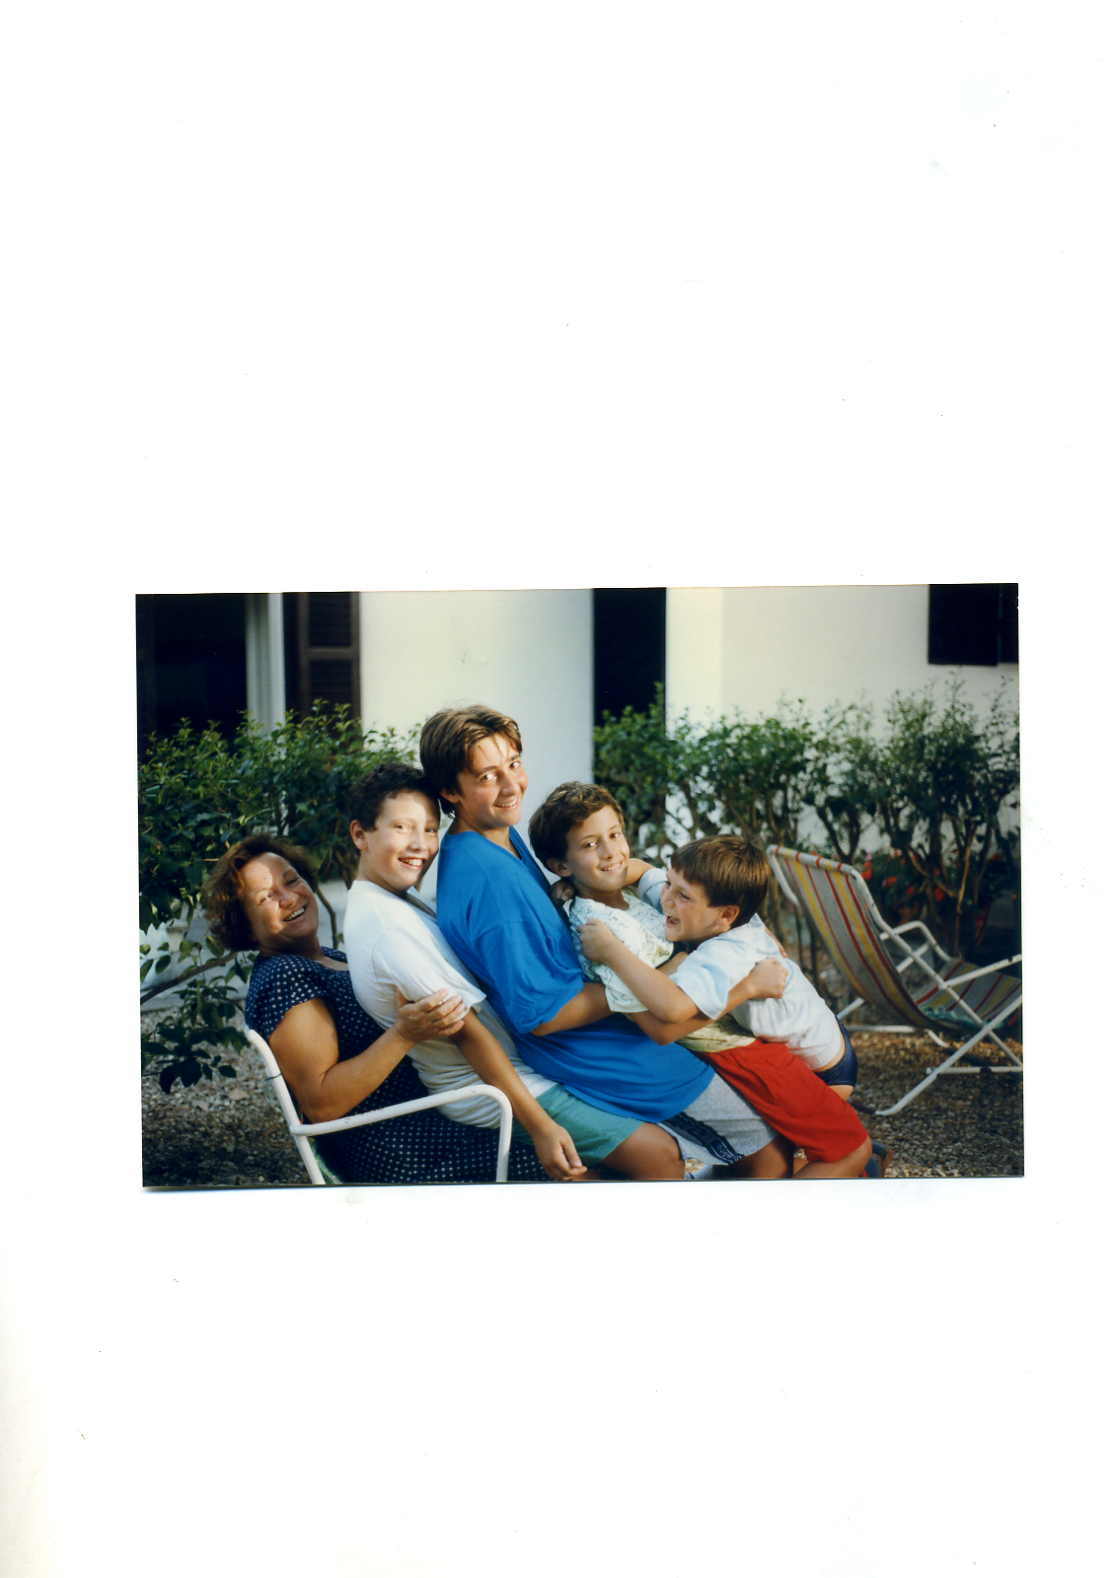 con maria, Riccardo, Paolo e Gabriele